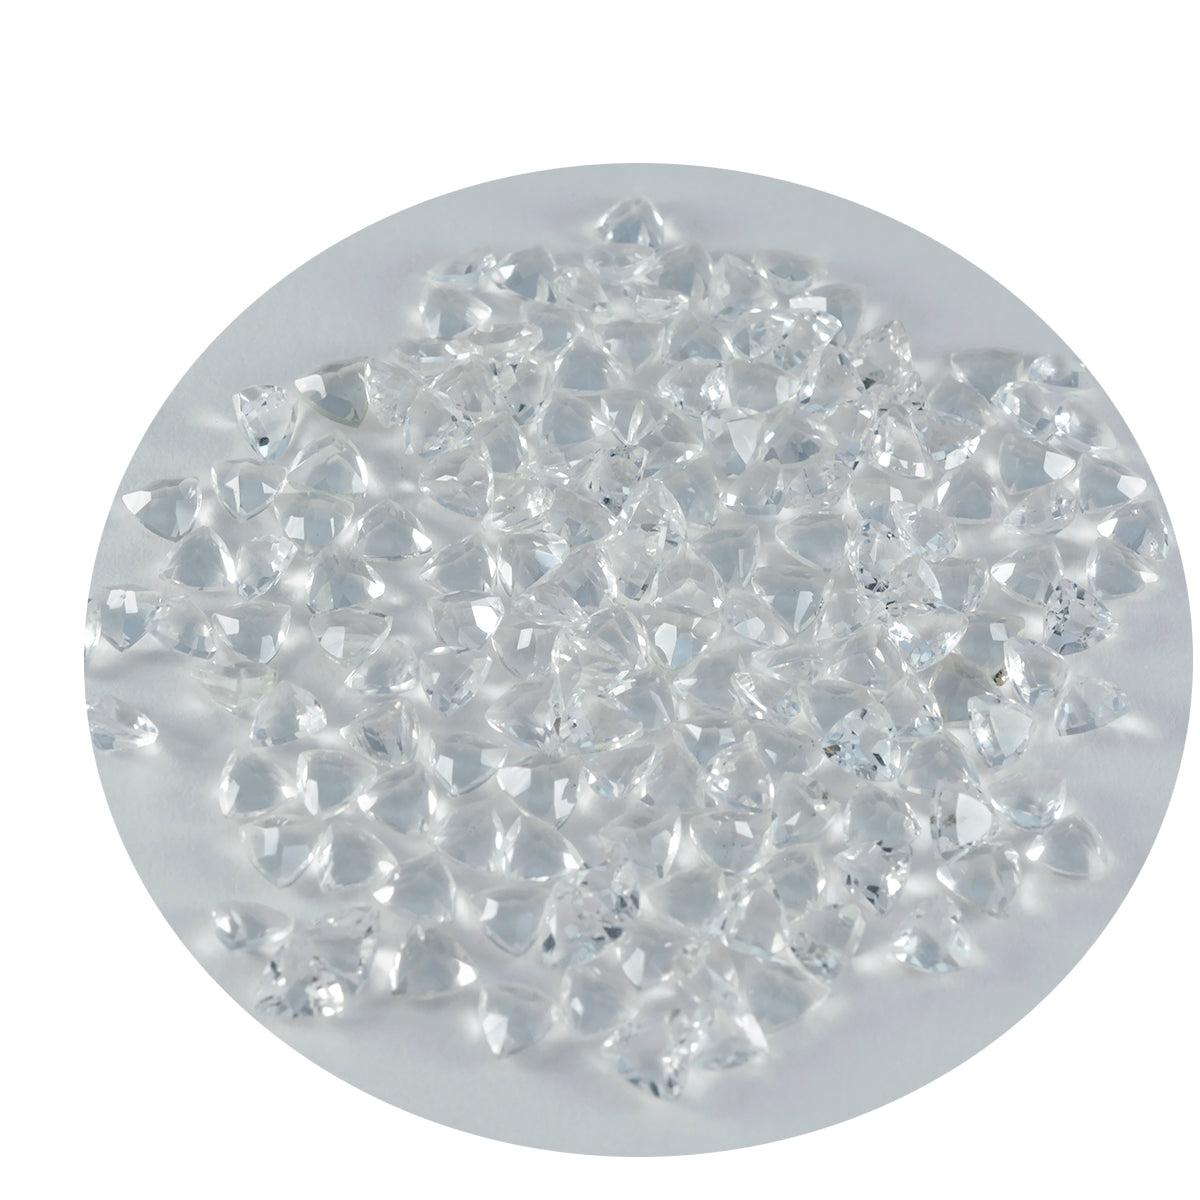 Riyogems 1PC wit kristalkwarts gefacetteerd 4x4 mm biljoen vorm verrassende kwaliteit edelsteen